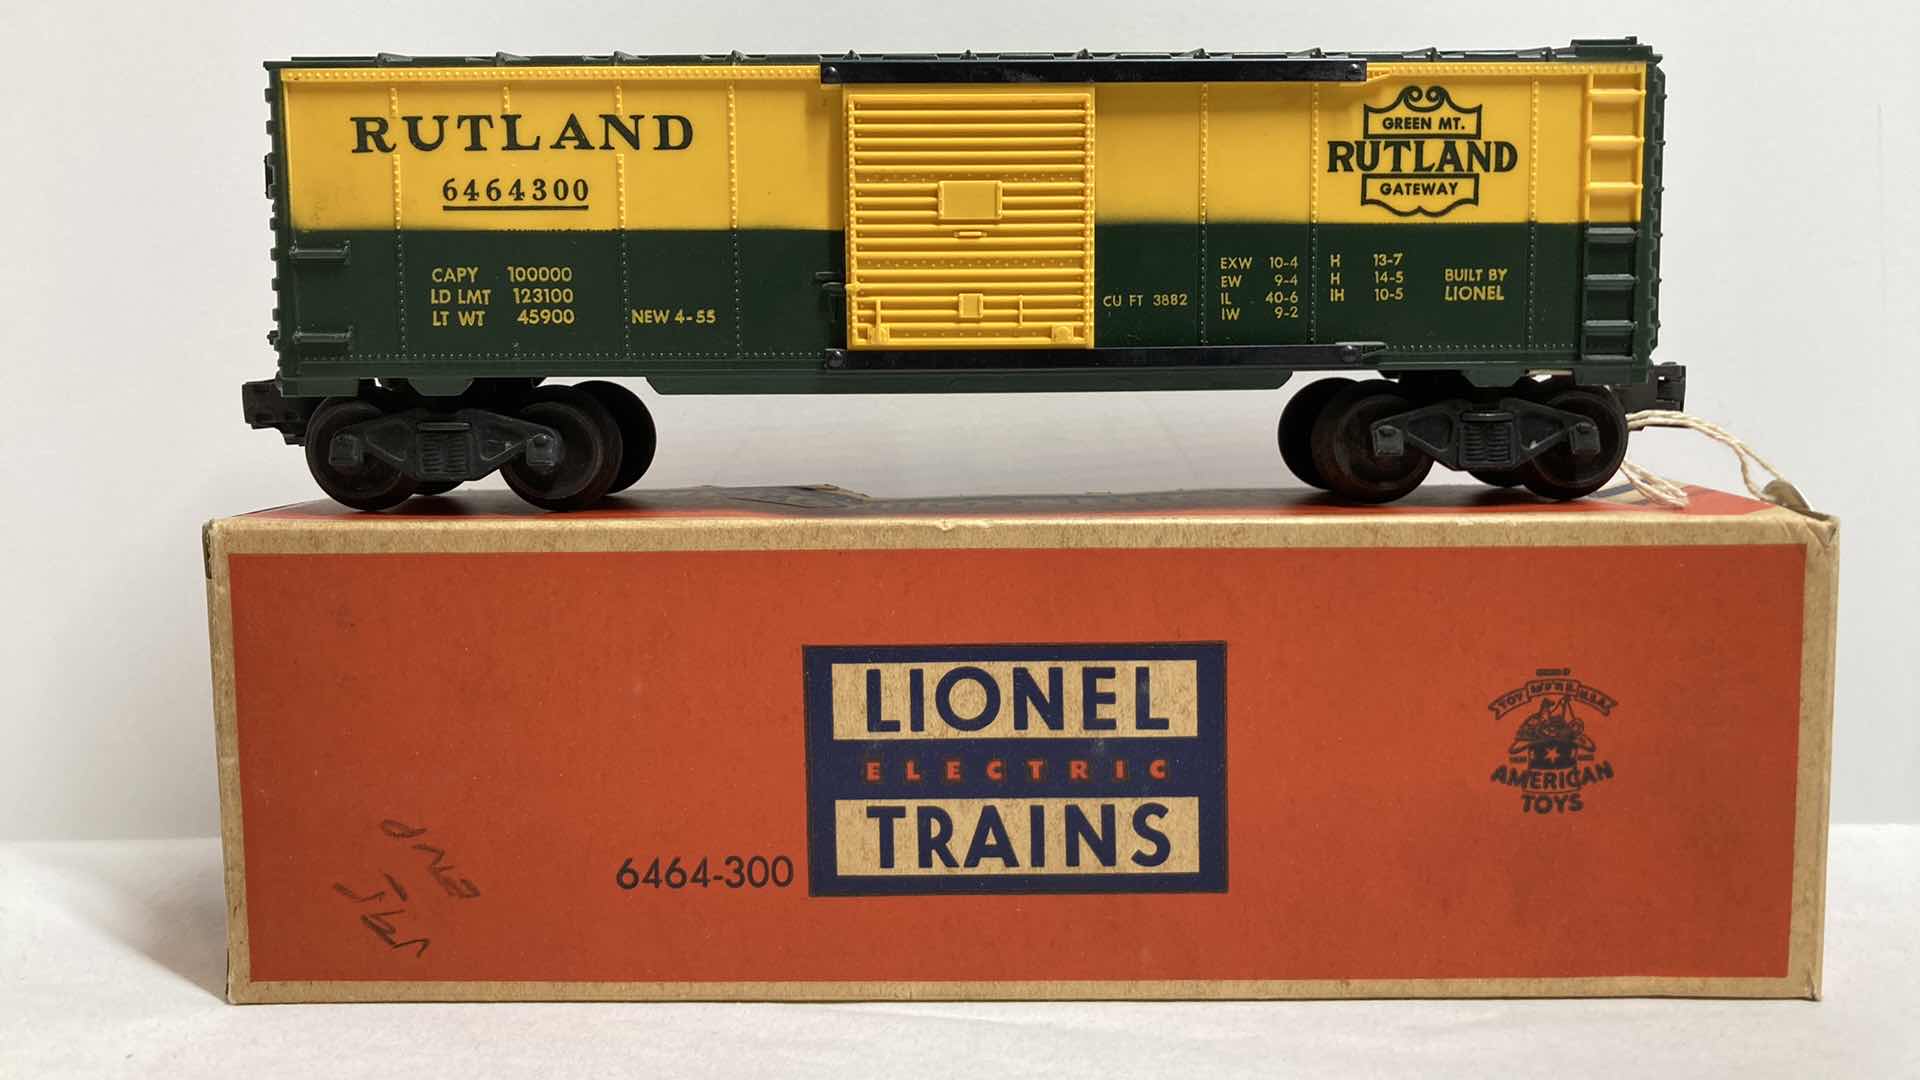 Photo 1 of LIONEL ELECTRIC TRAINS RUTLAND BOX CAR 6464-300